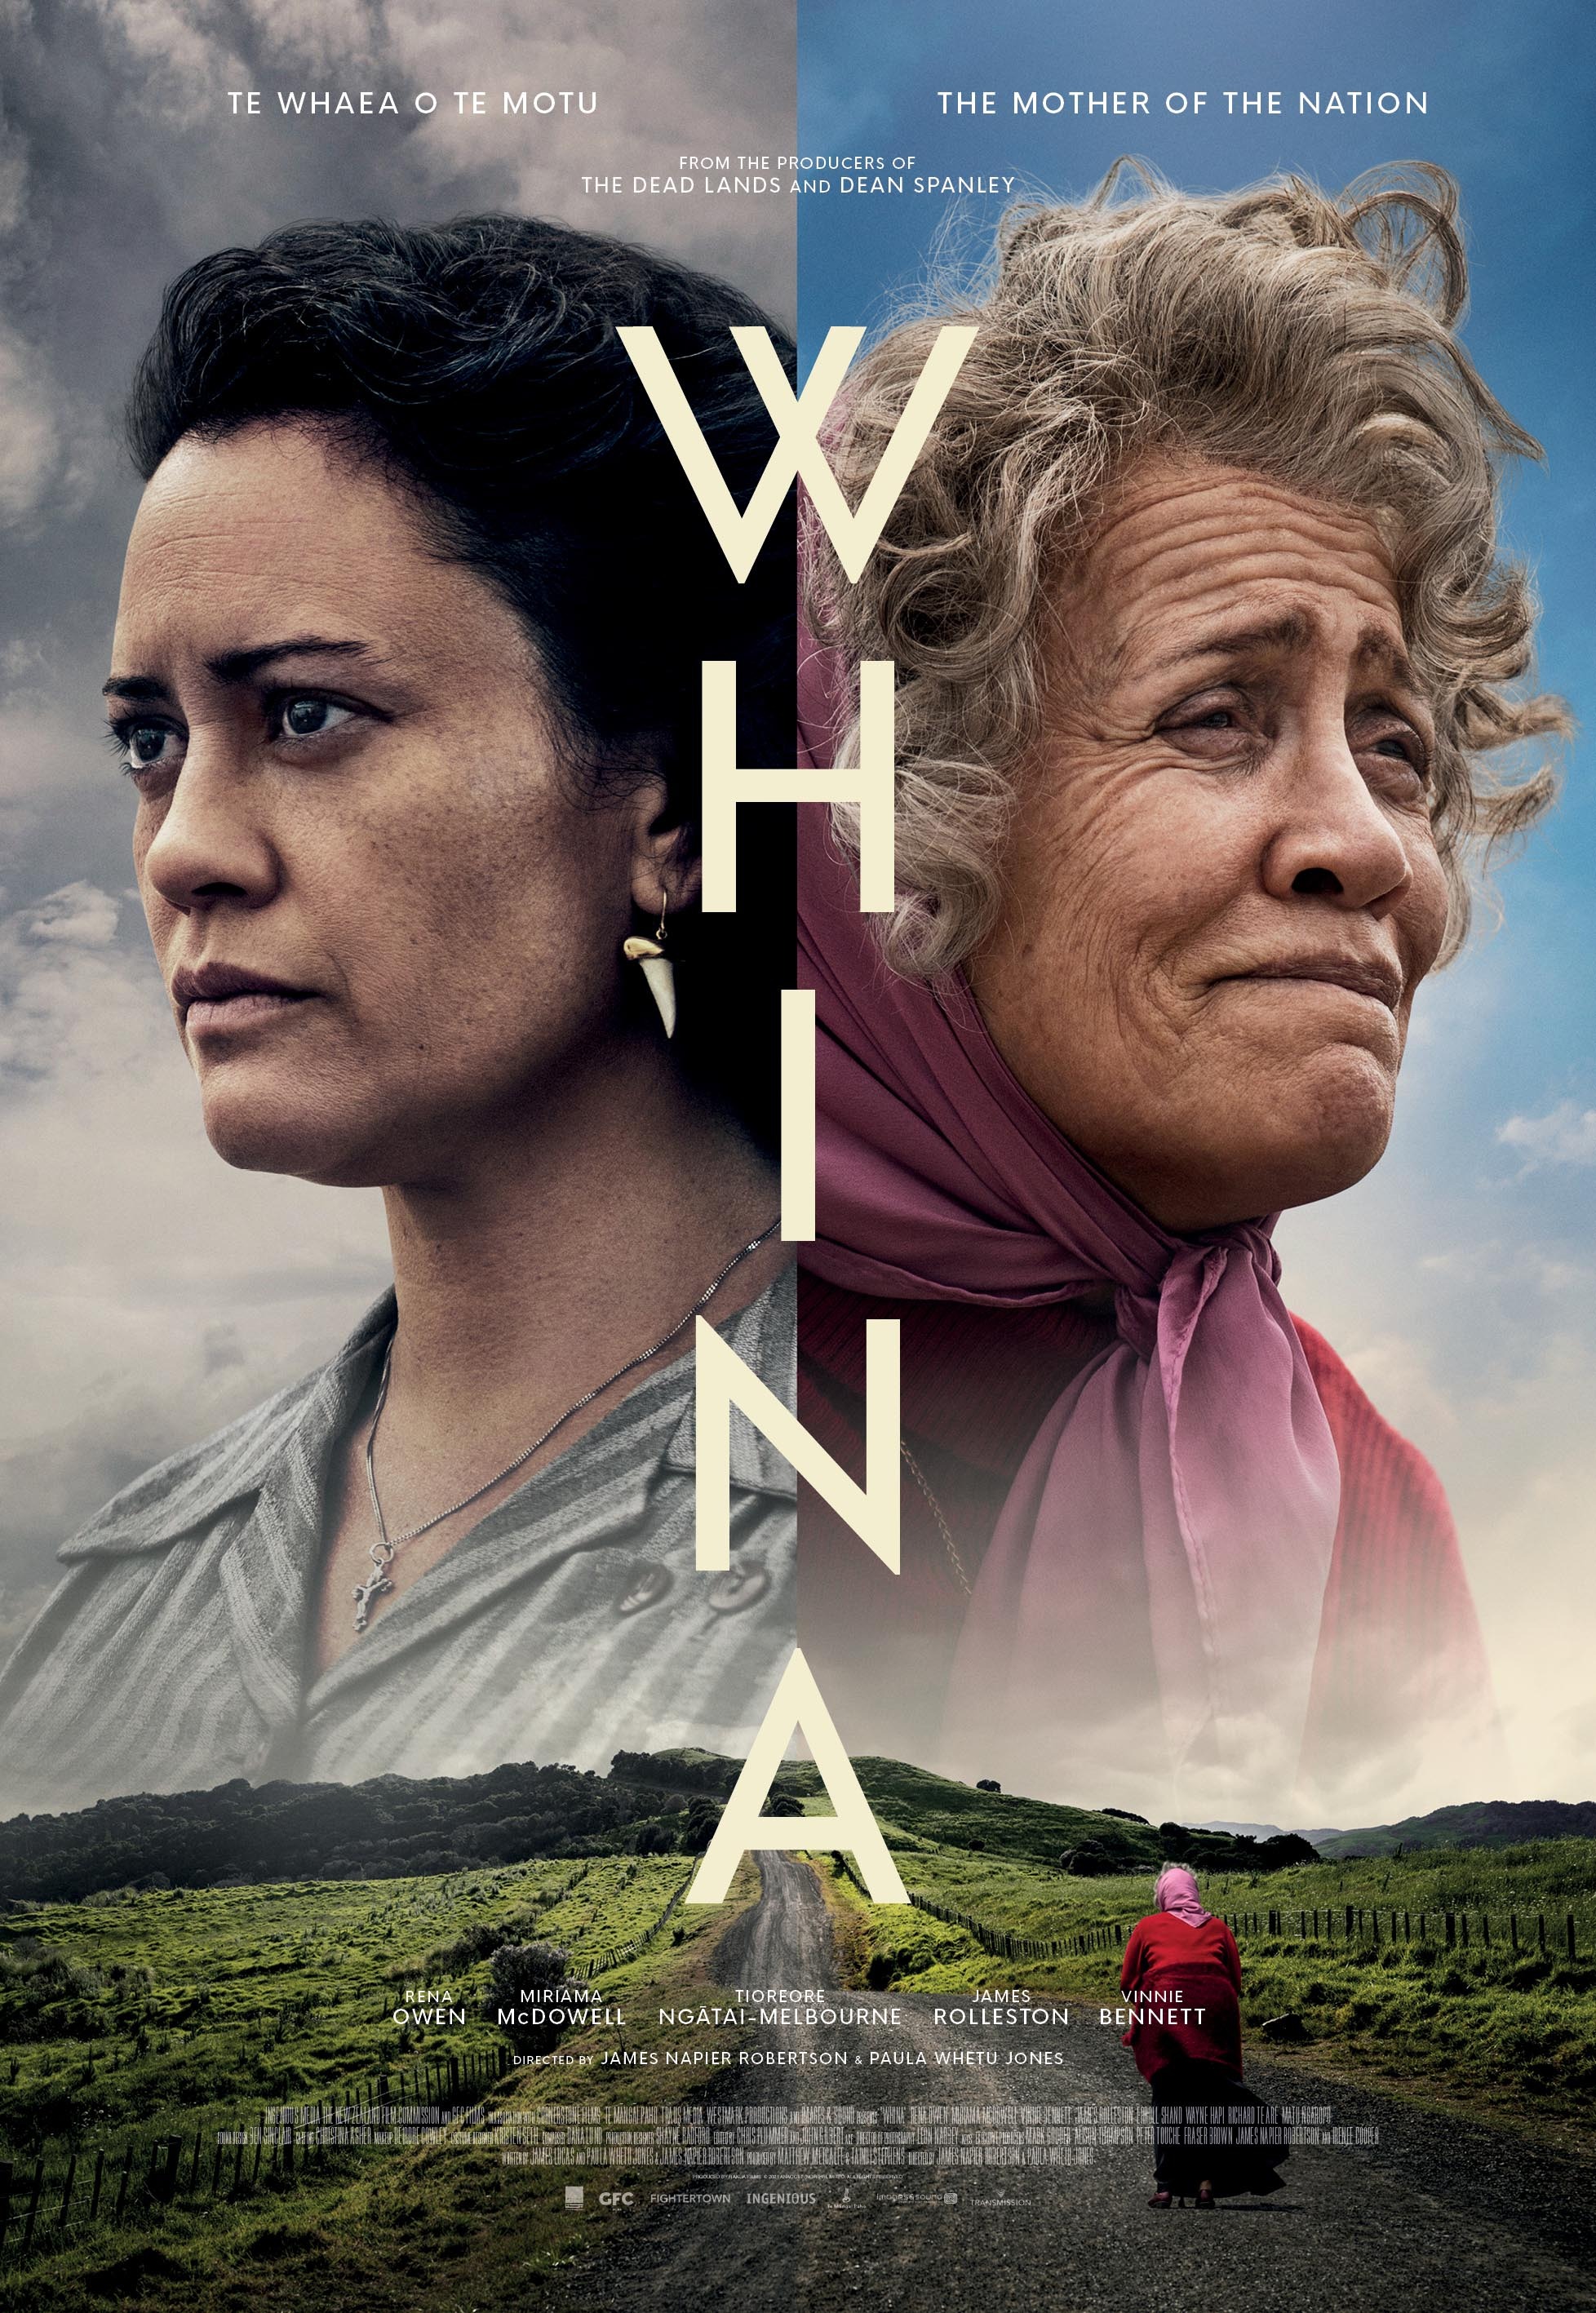 Mega Sized Movie Poster Image for Whina 